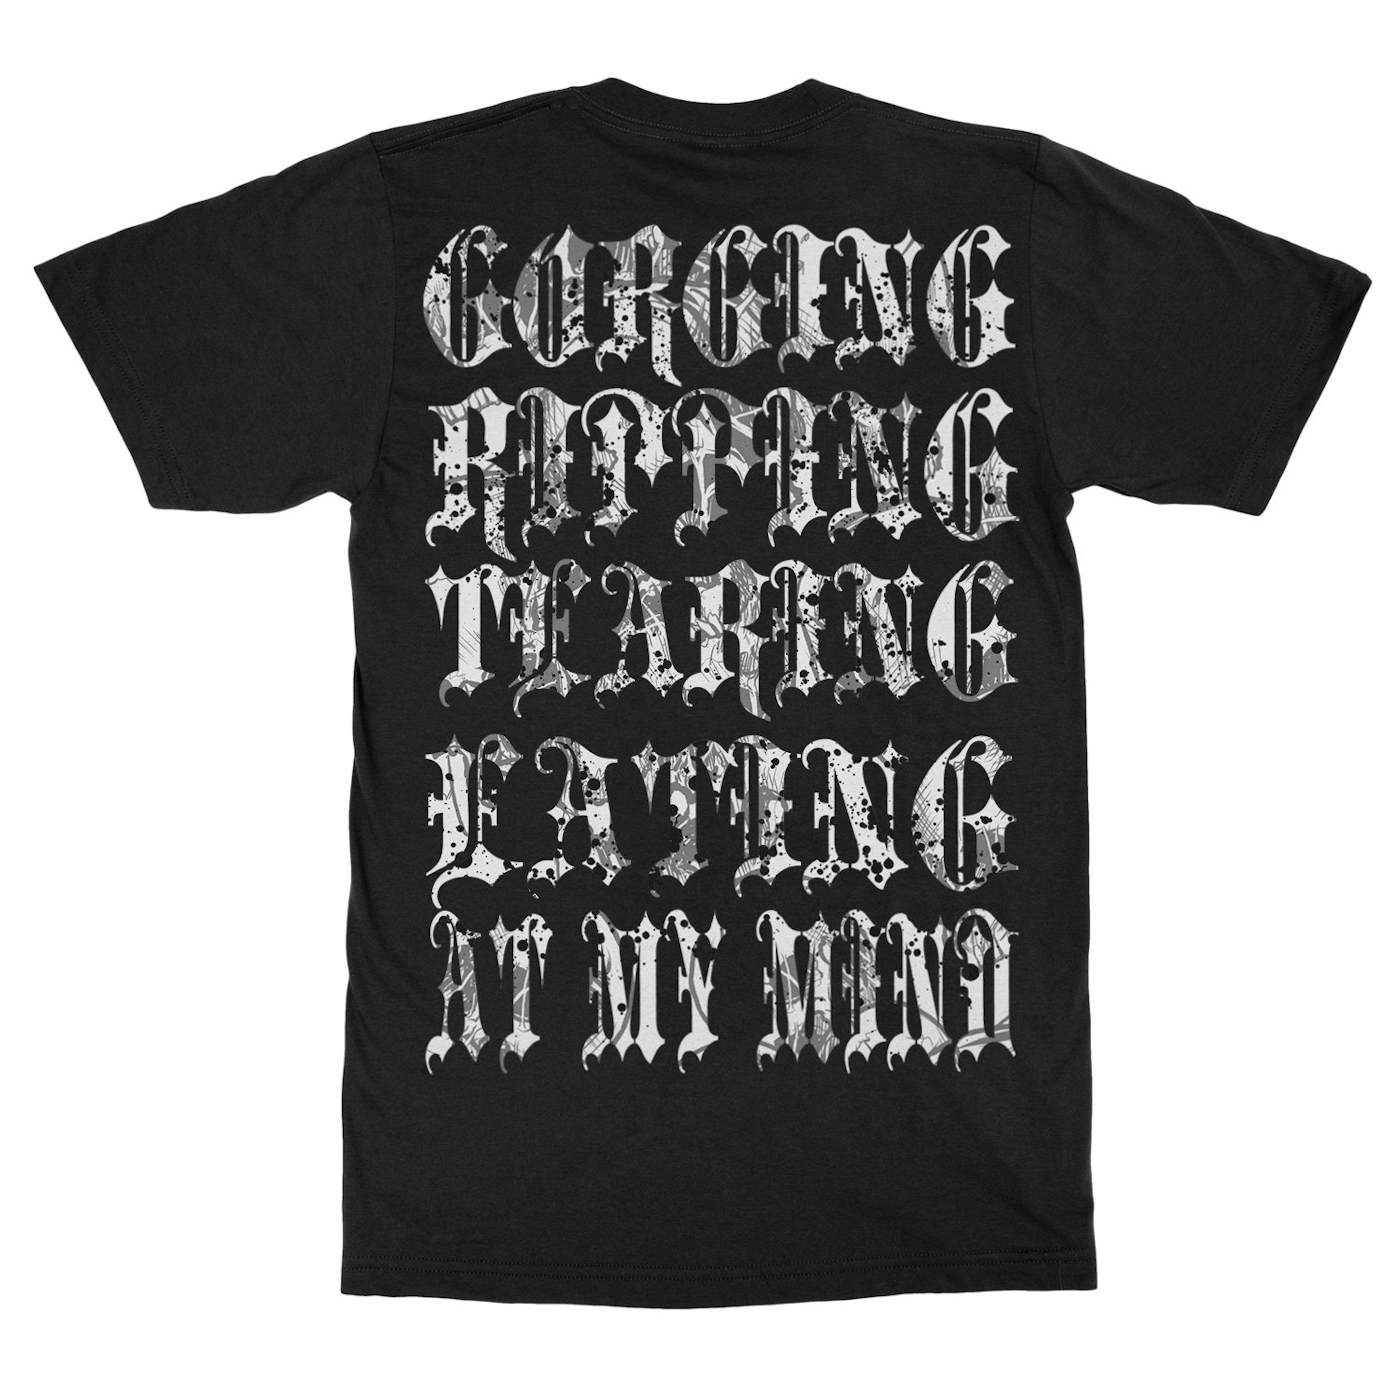 Organectomy "Gorging" T-Shirt